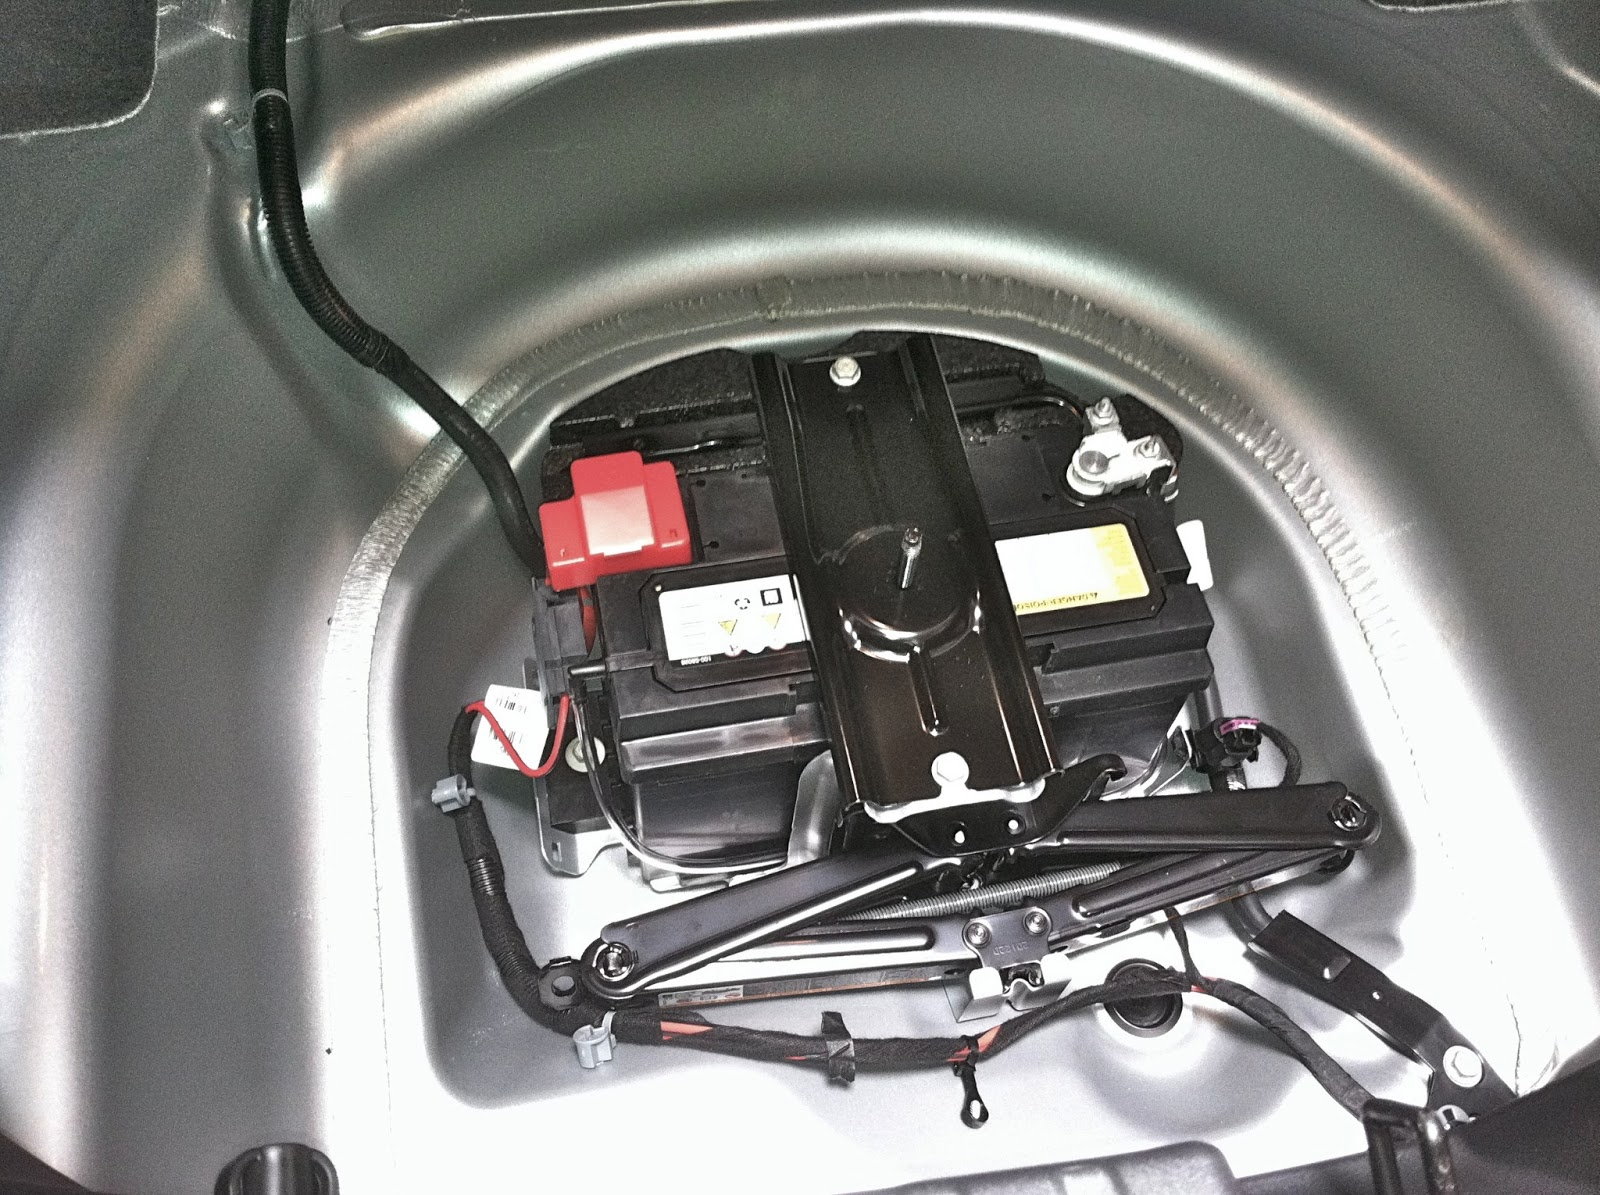 Camaro Firebird 4th gen F-body LS1 air intake slp lid review how to replacement DIY